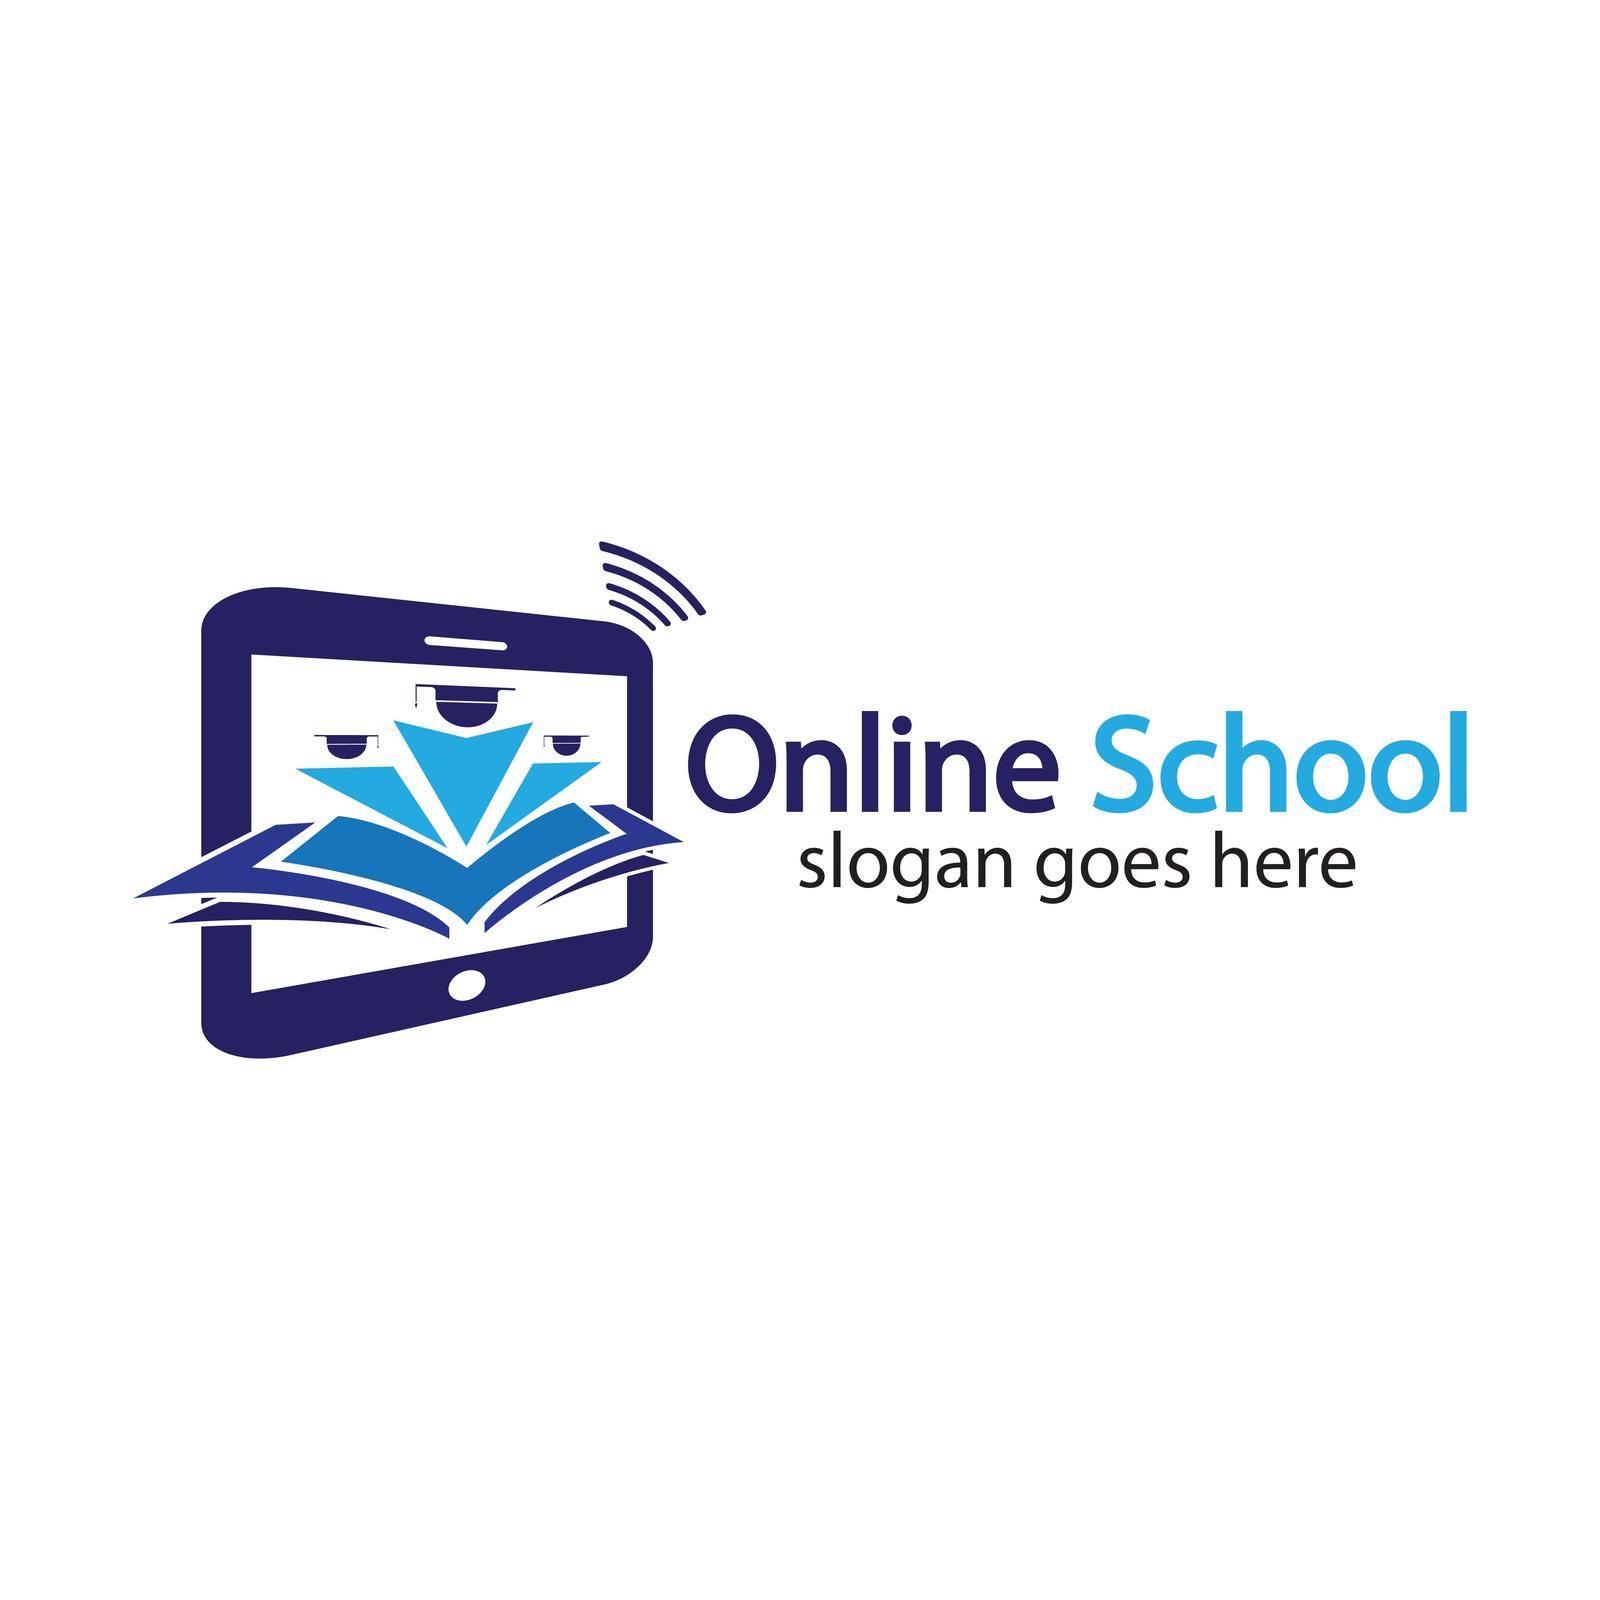 Online Education logo design template. Online course logo design. Online Learning logo by Mrsongrphc